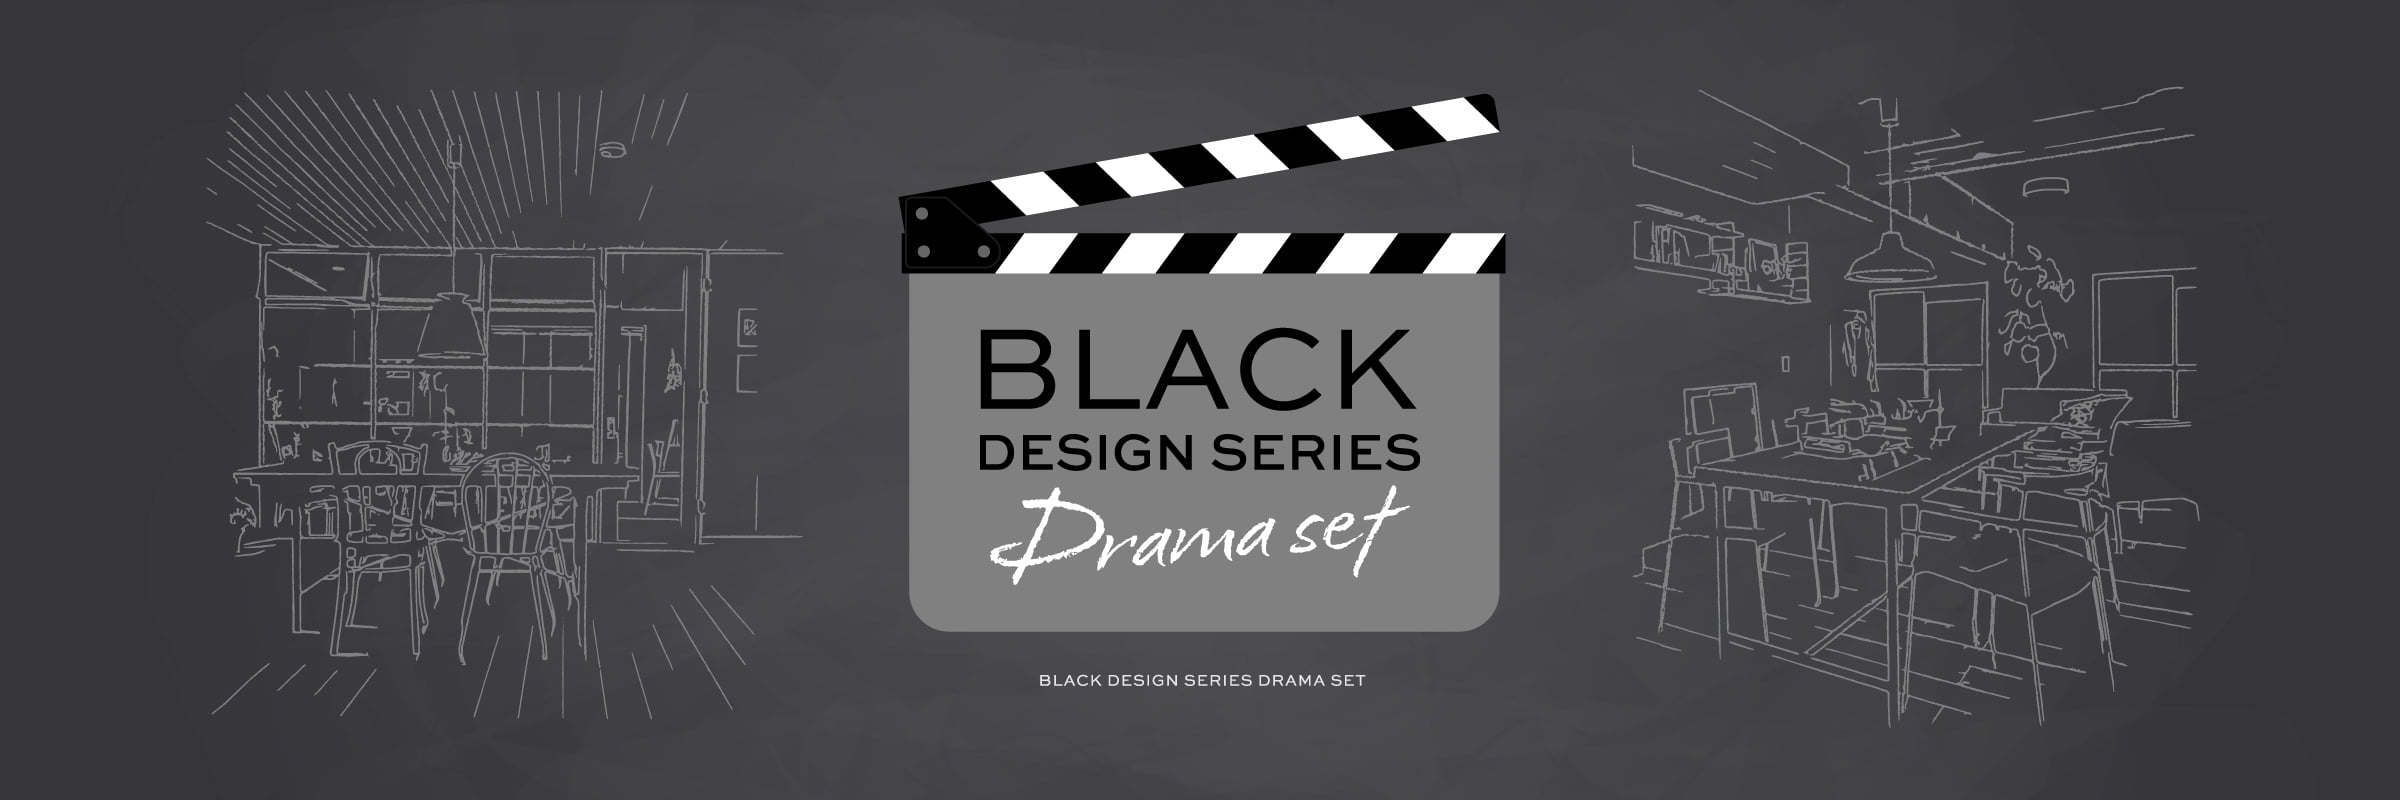 BLACK DESIGN SERIES Drama set